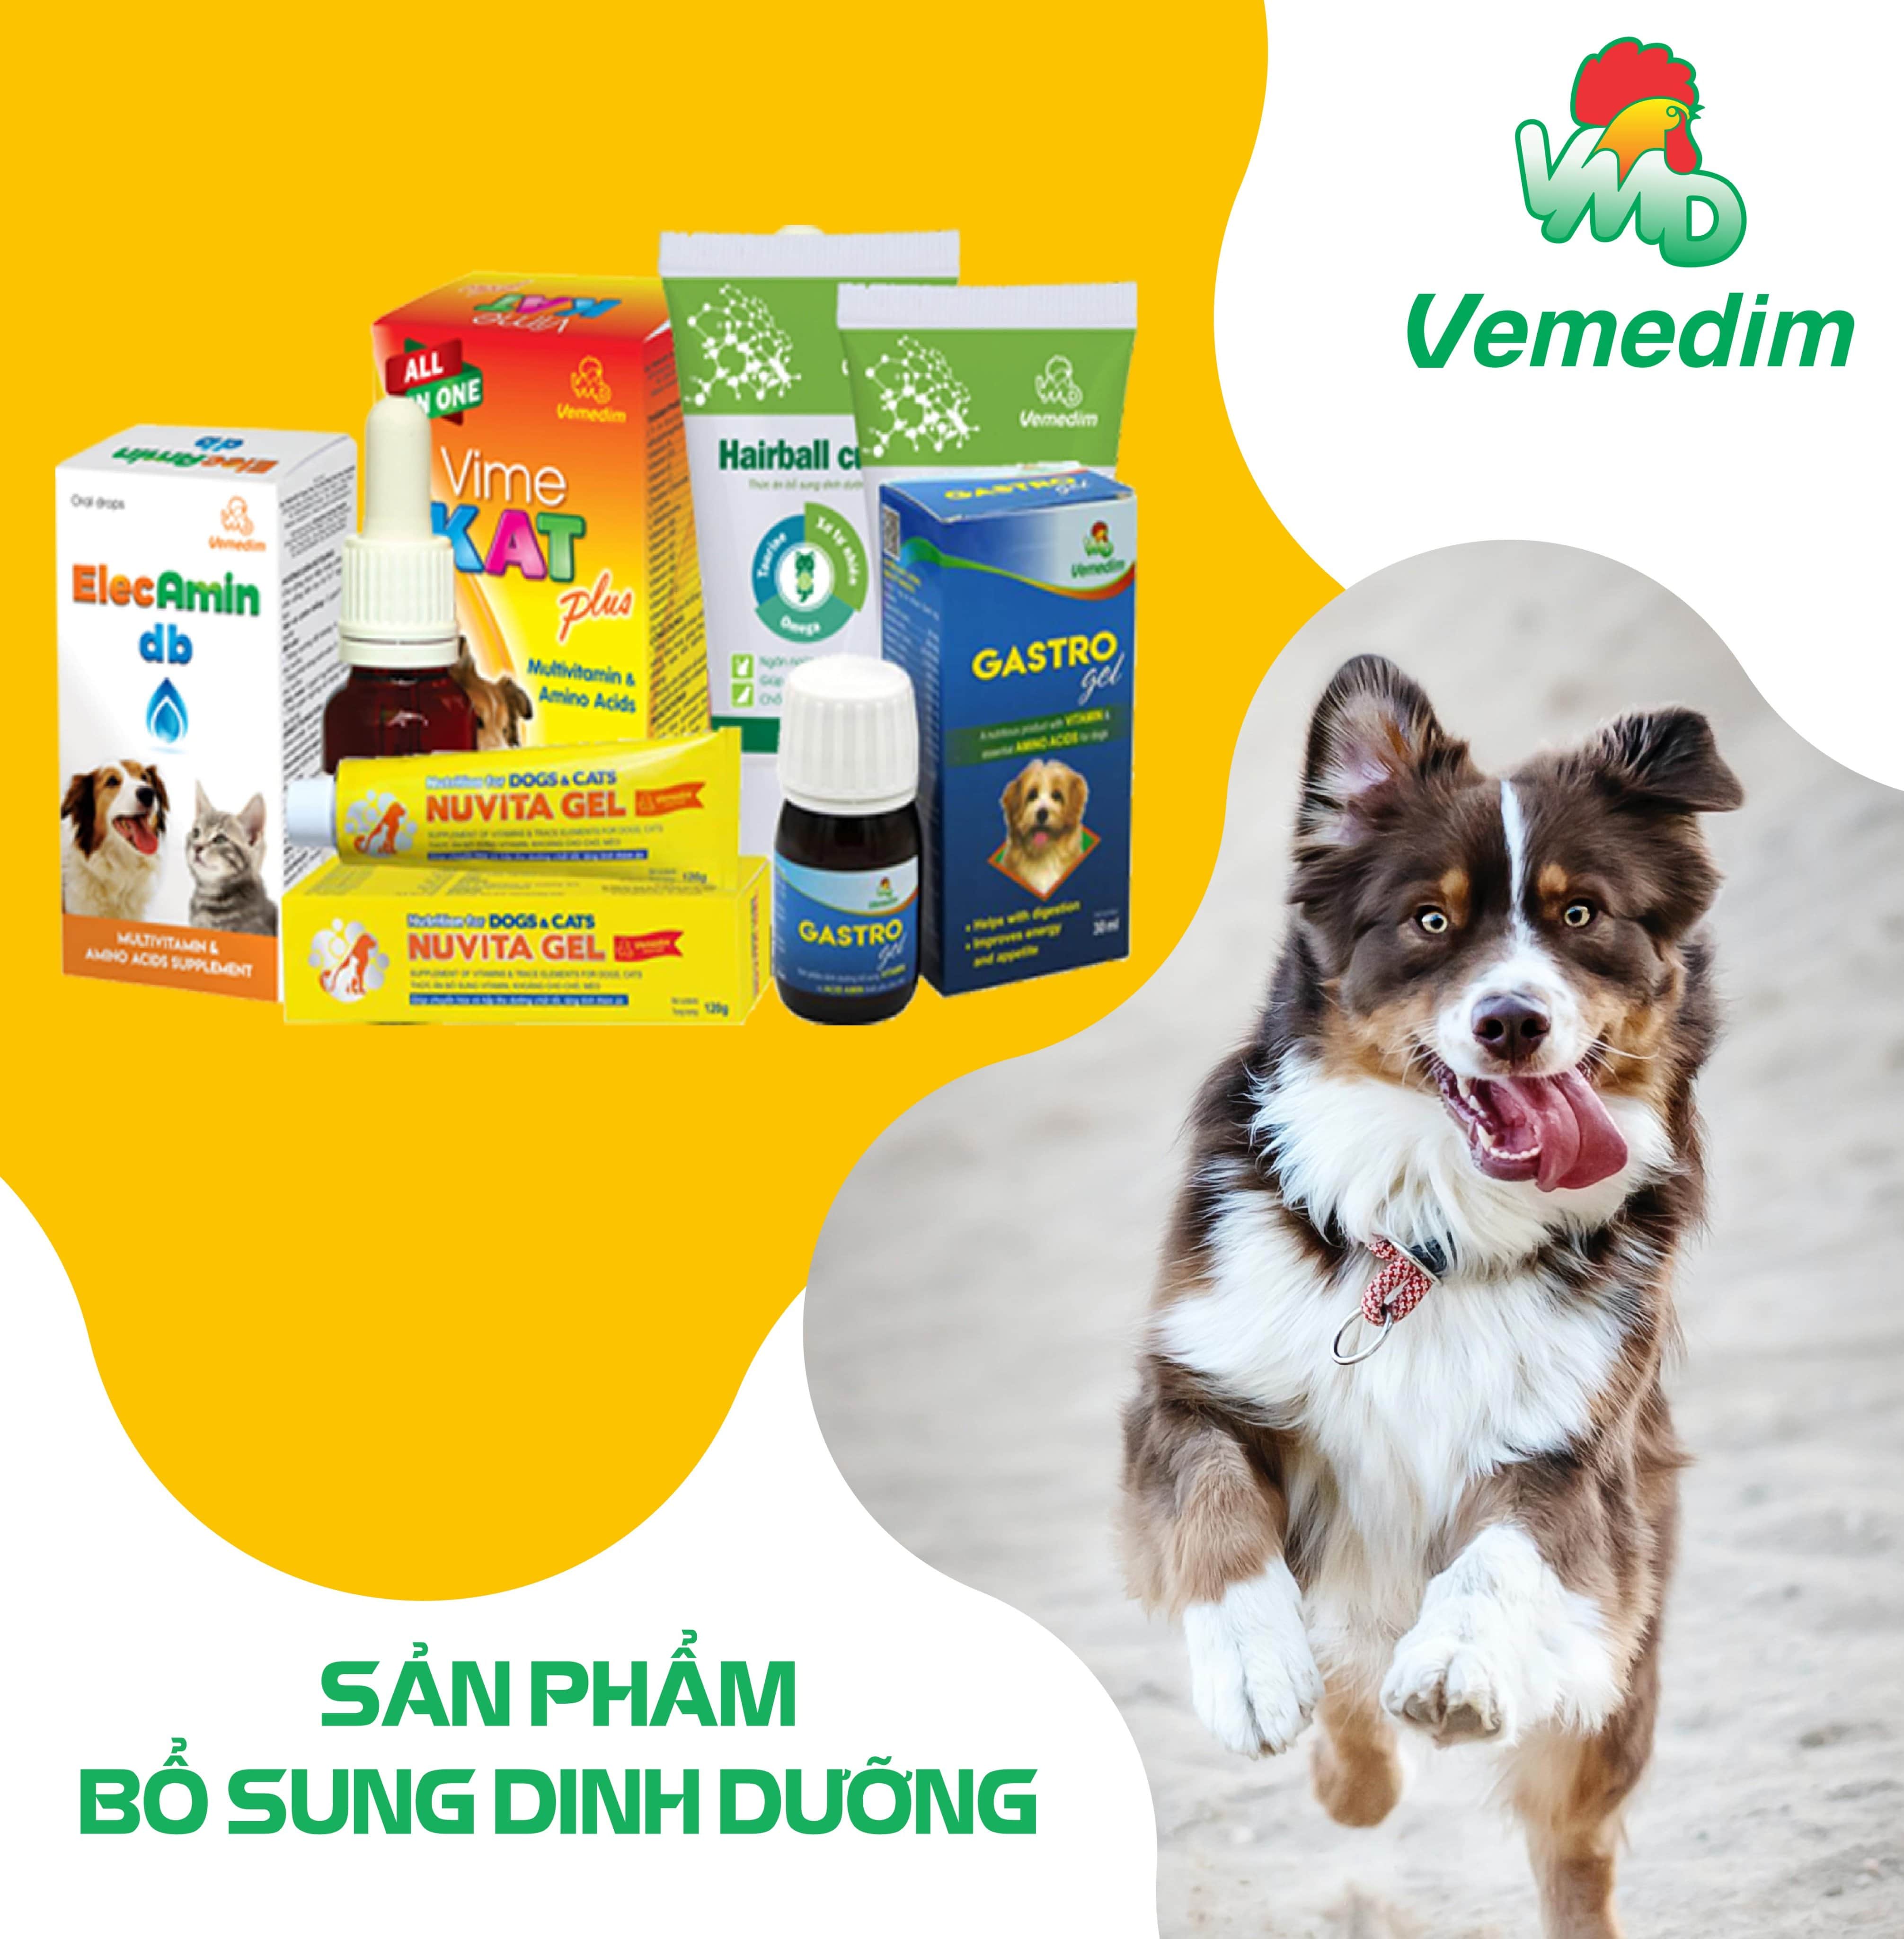 Vemedim ElecAmin db - Bổ sung Multivitamin &amp; acid amin cho chó mèo, chim thú cảnh, chai 20ml